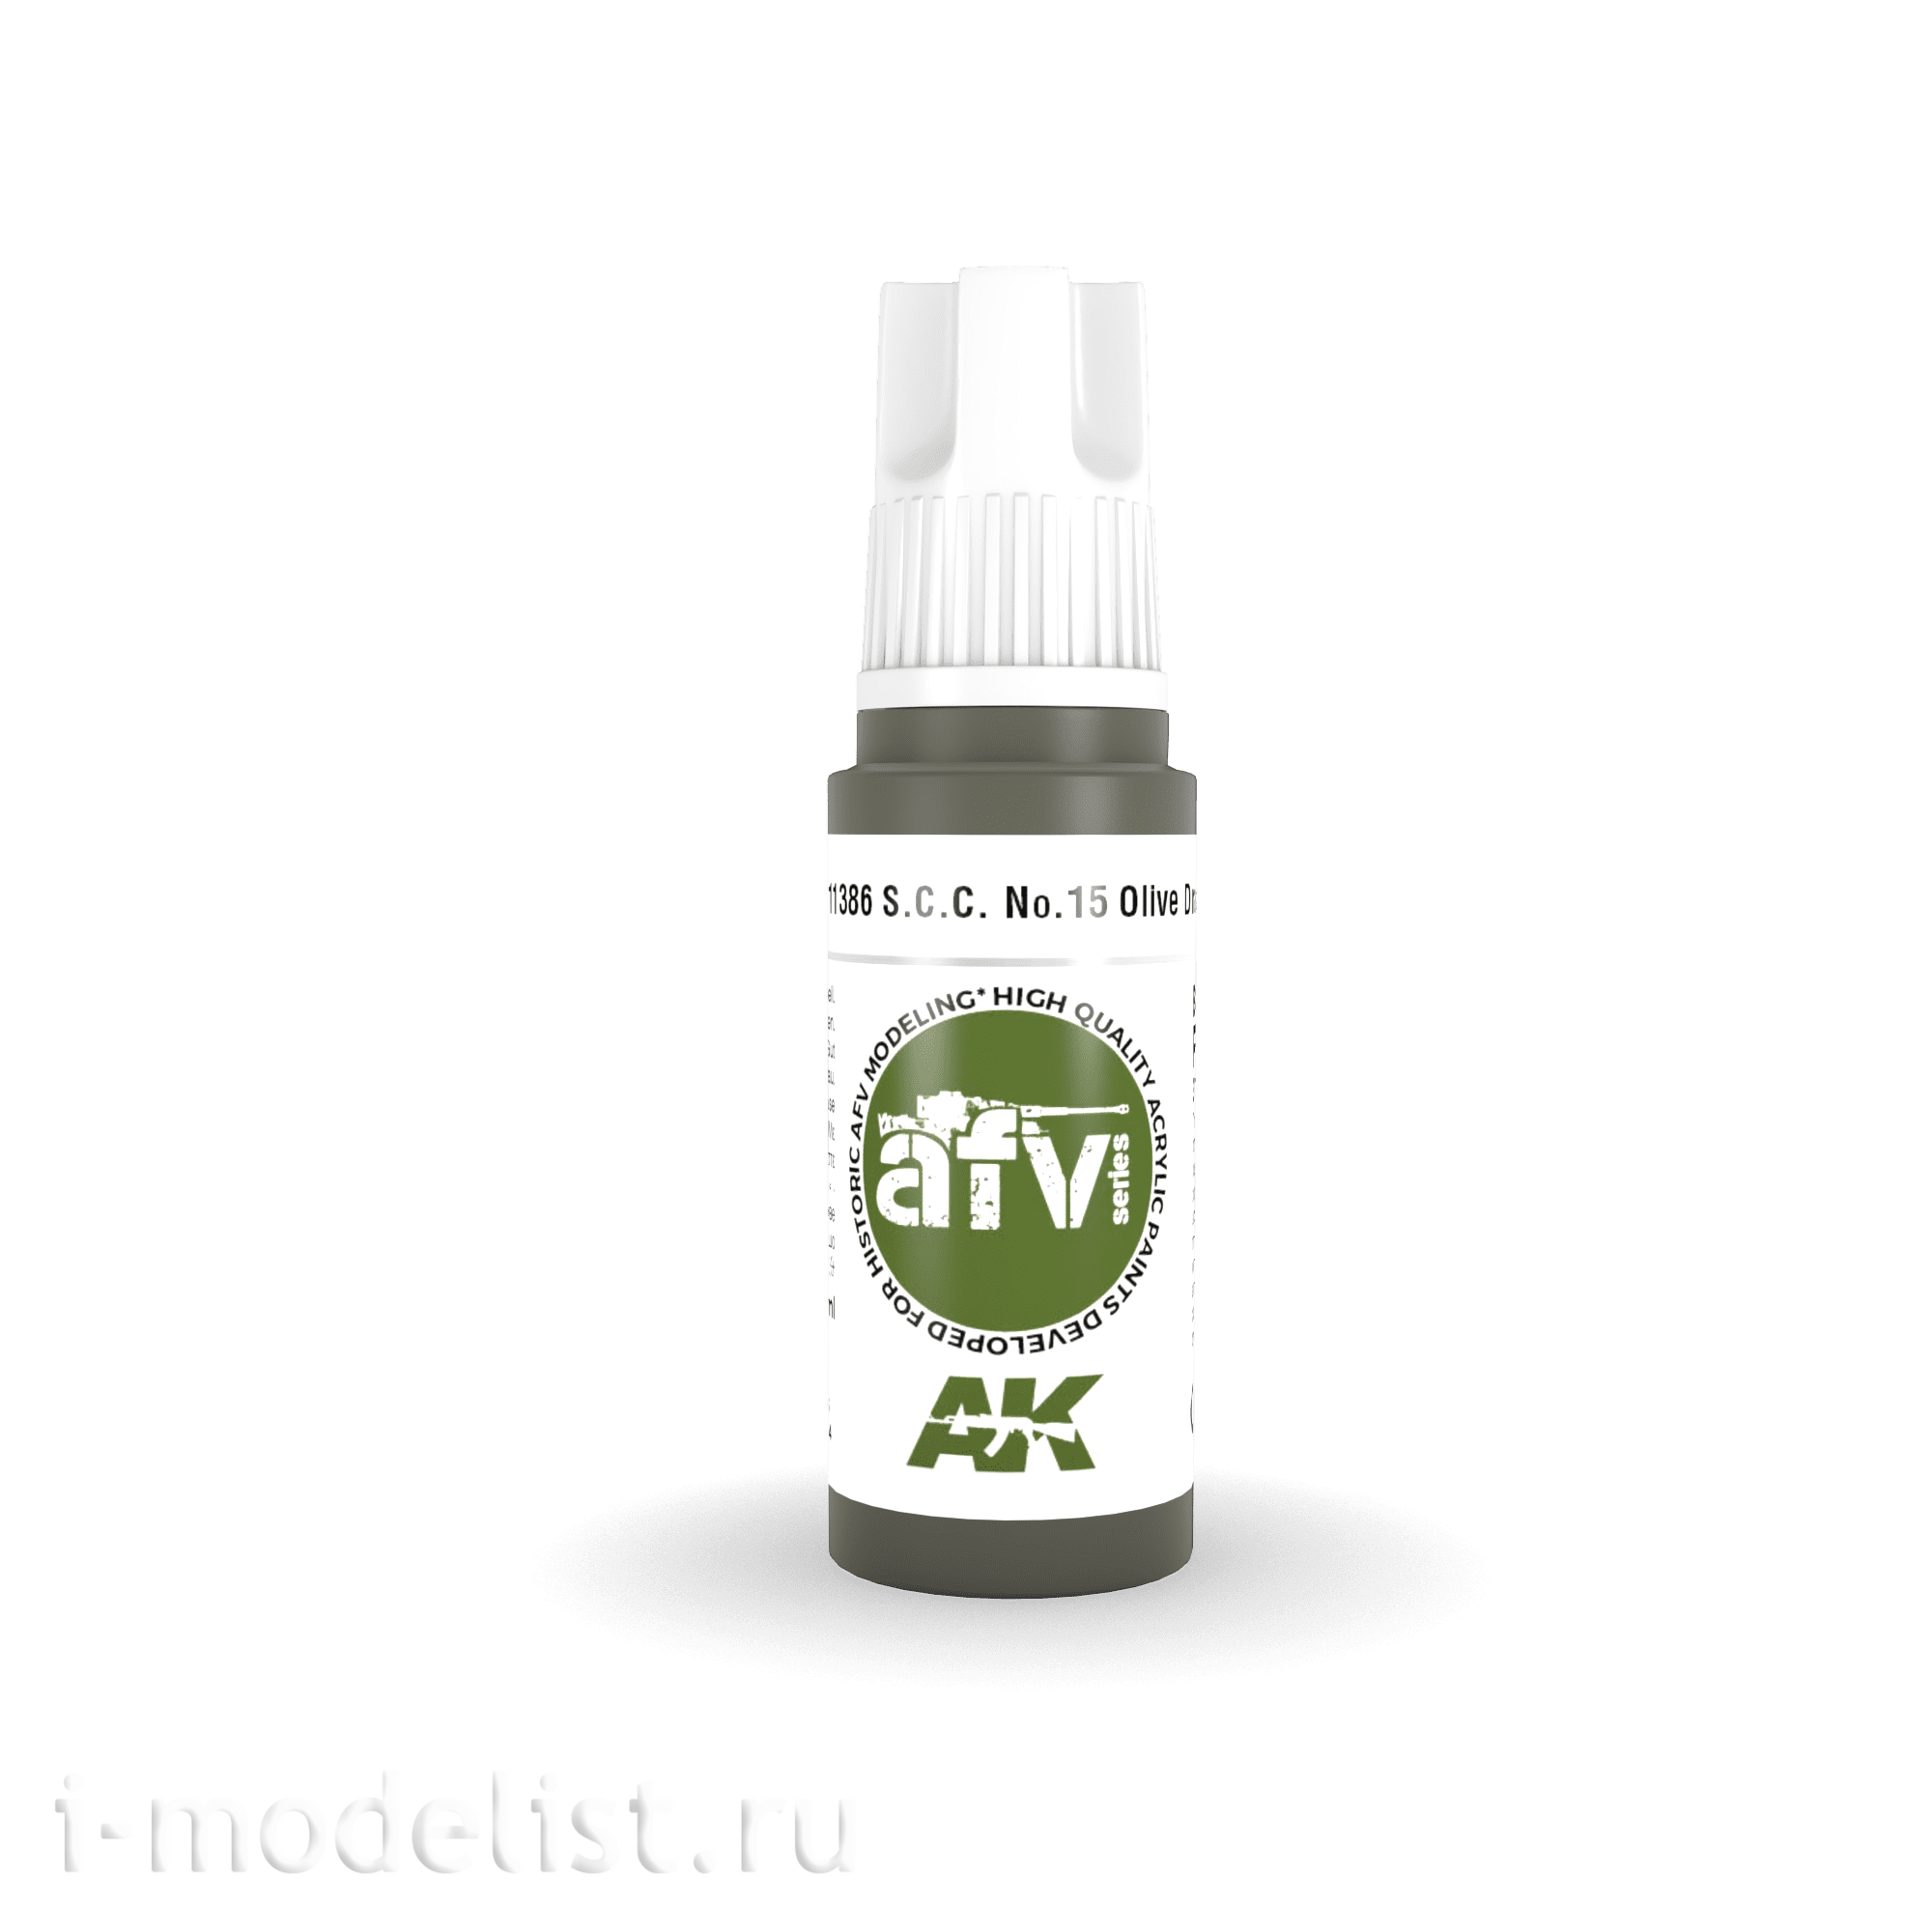 AK11386 AK Interactive Acrylic paint S. C. C. No. 15 OLIVE DRAB (olive grey No. 15) 17 ml